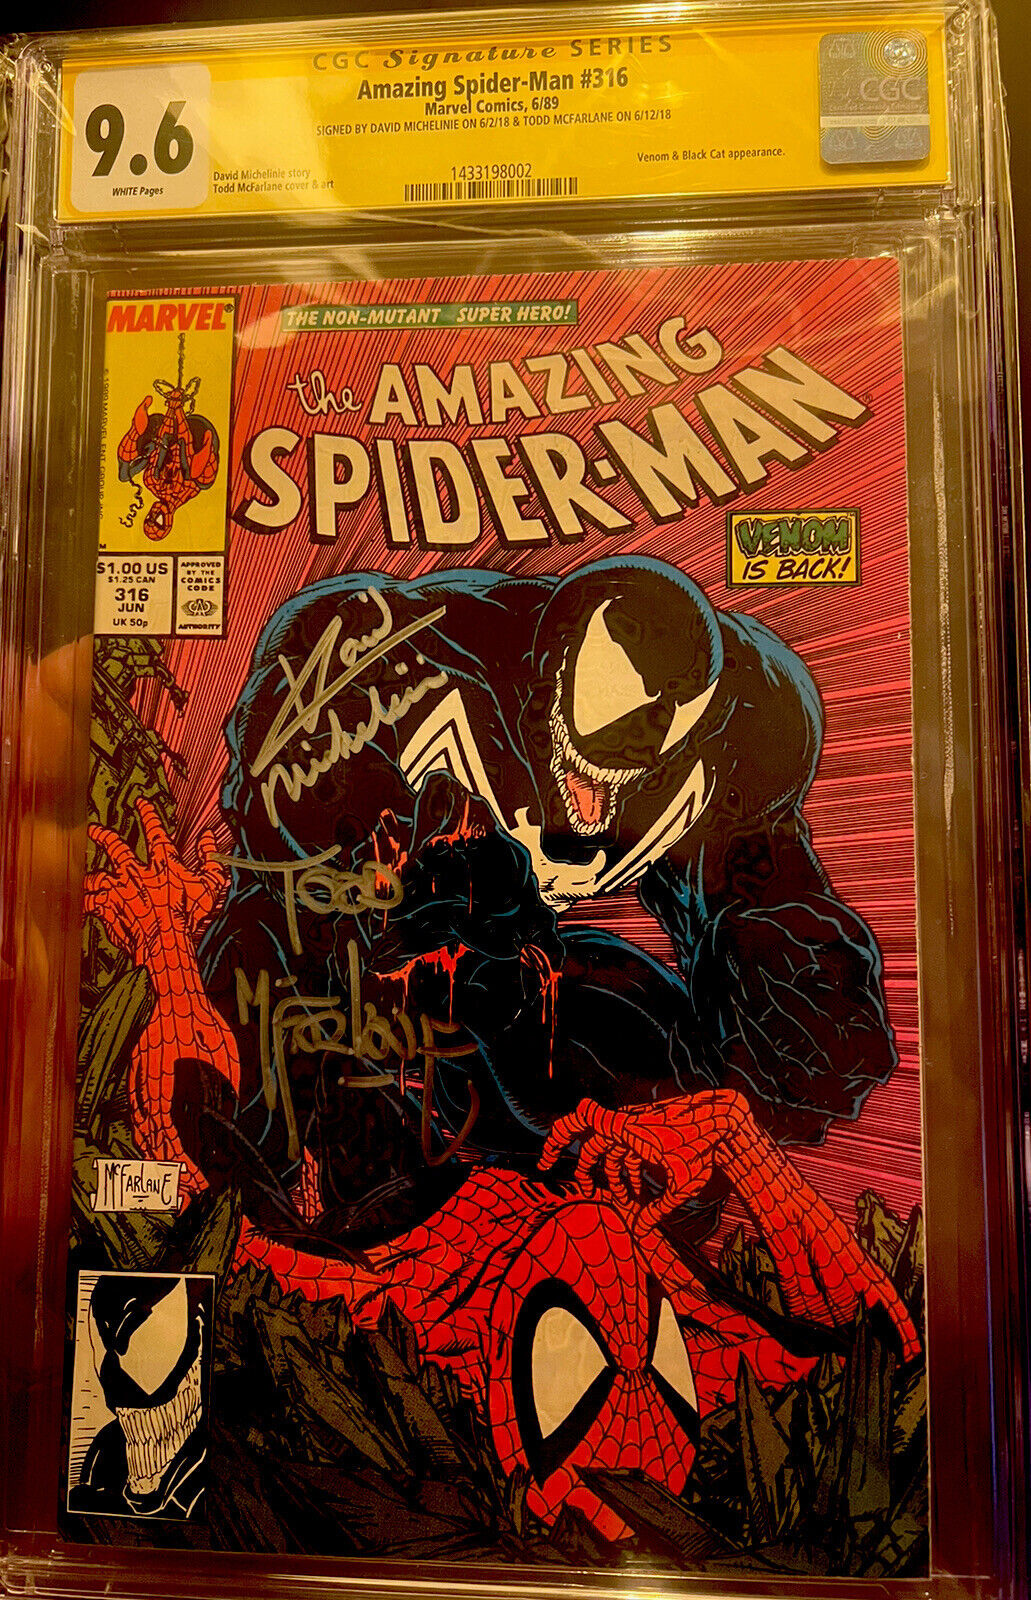 CGC 9.6 SS Amazing Spiderman #316 2x Signed By McFarlane & Micheline🕸️ Venom 🏆